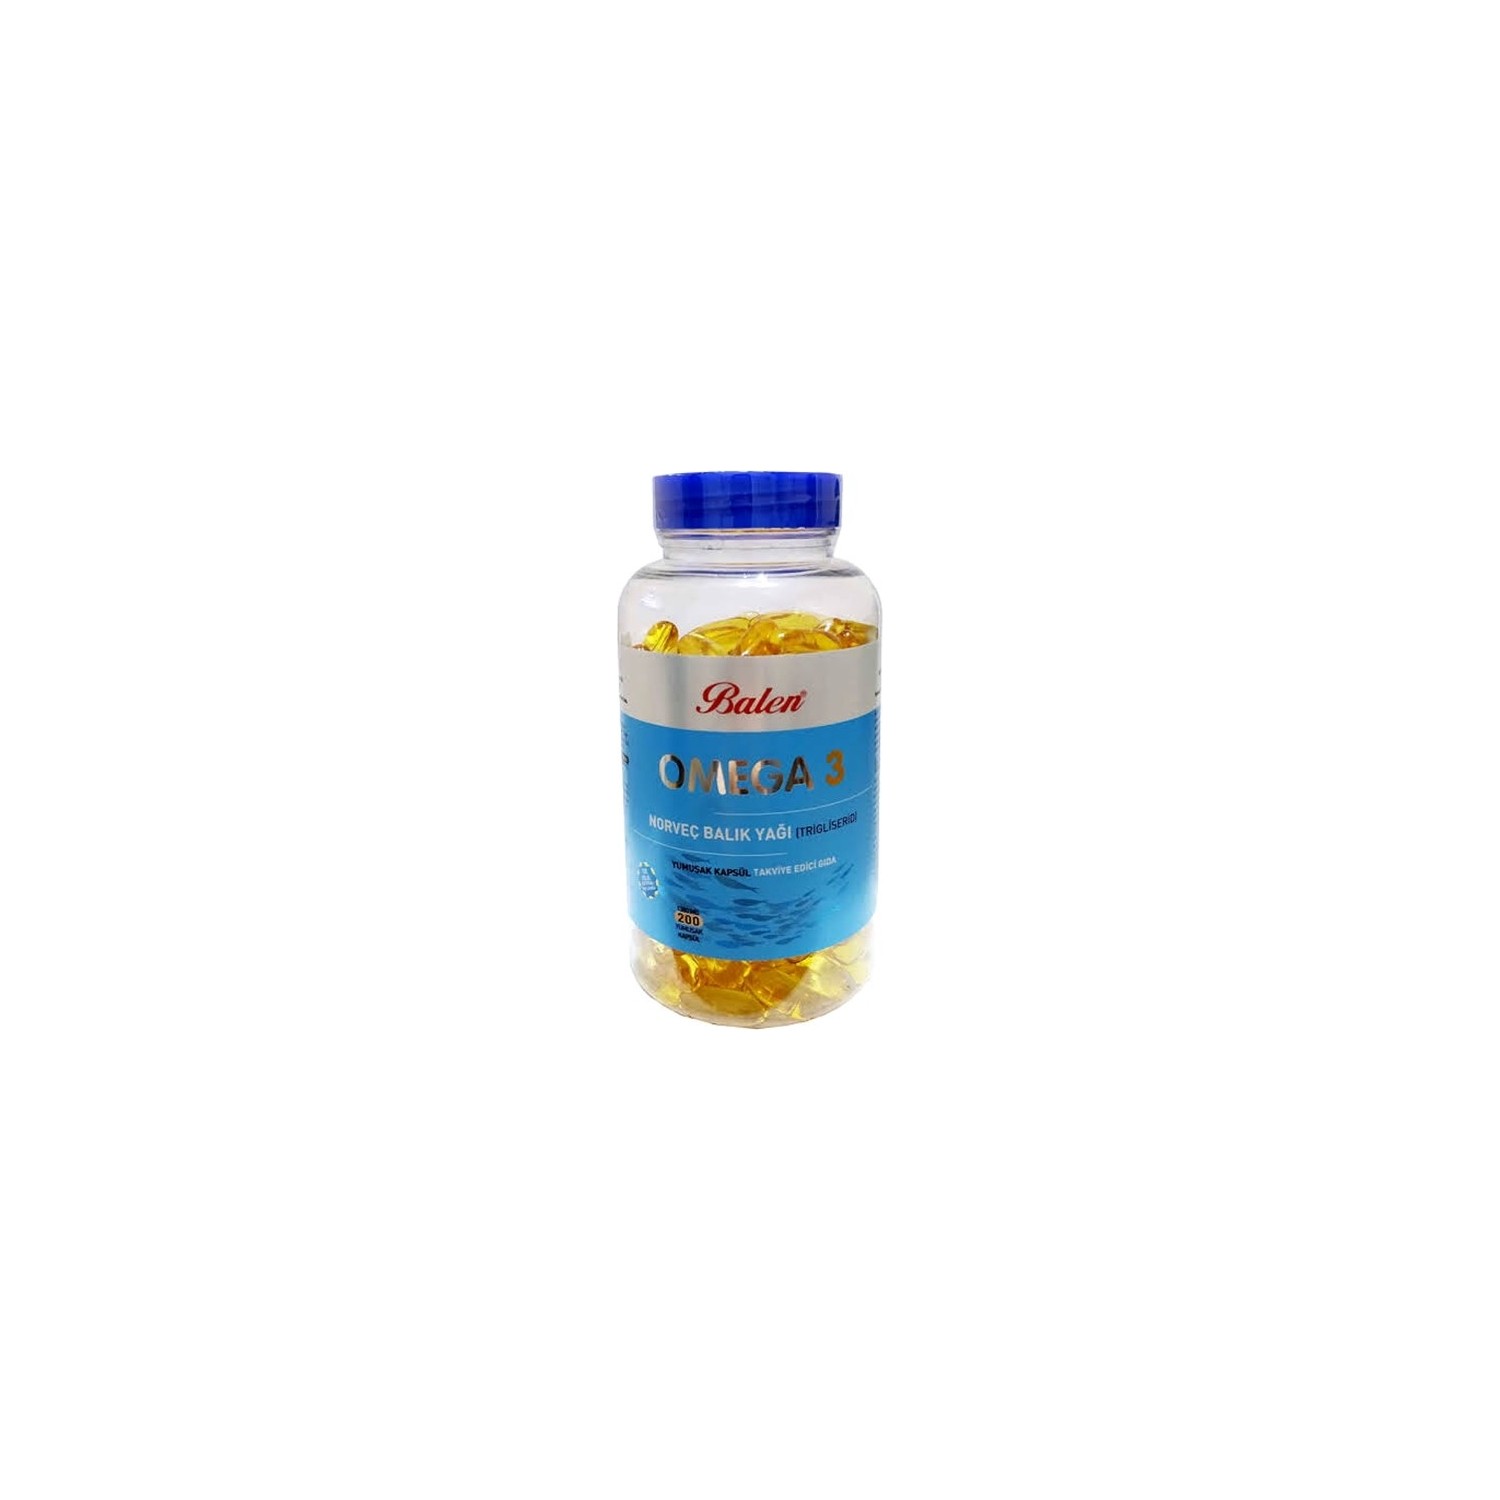 Норвежский рыбий жир Balen Omega-3 (триглицерид) 1380 мг, 200 капсул норвежский рыбий жир balen omega 3 триглицерид 1380 мг 3 упаковки по 200 капсул